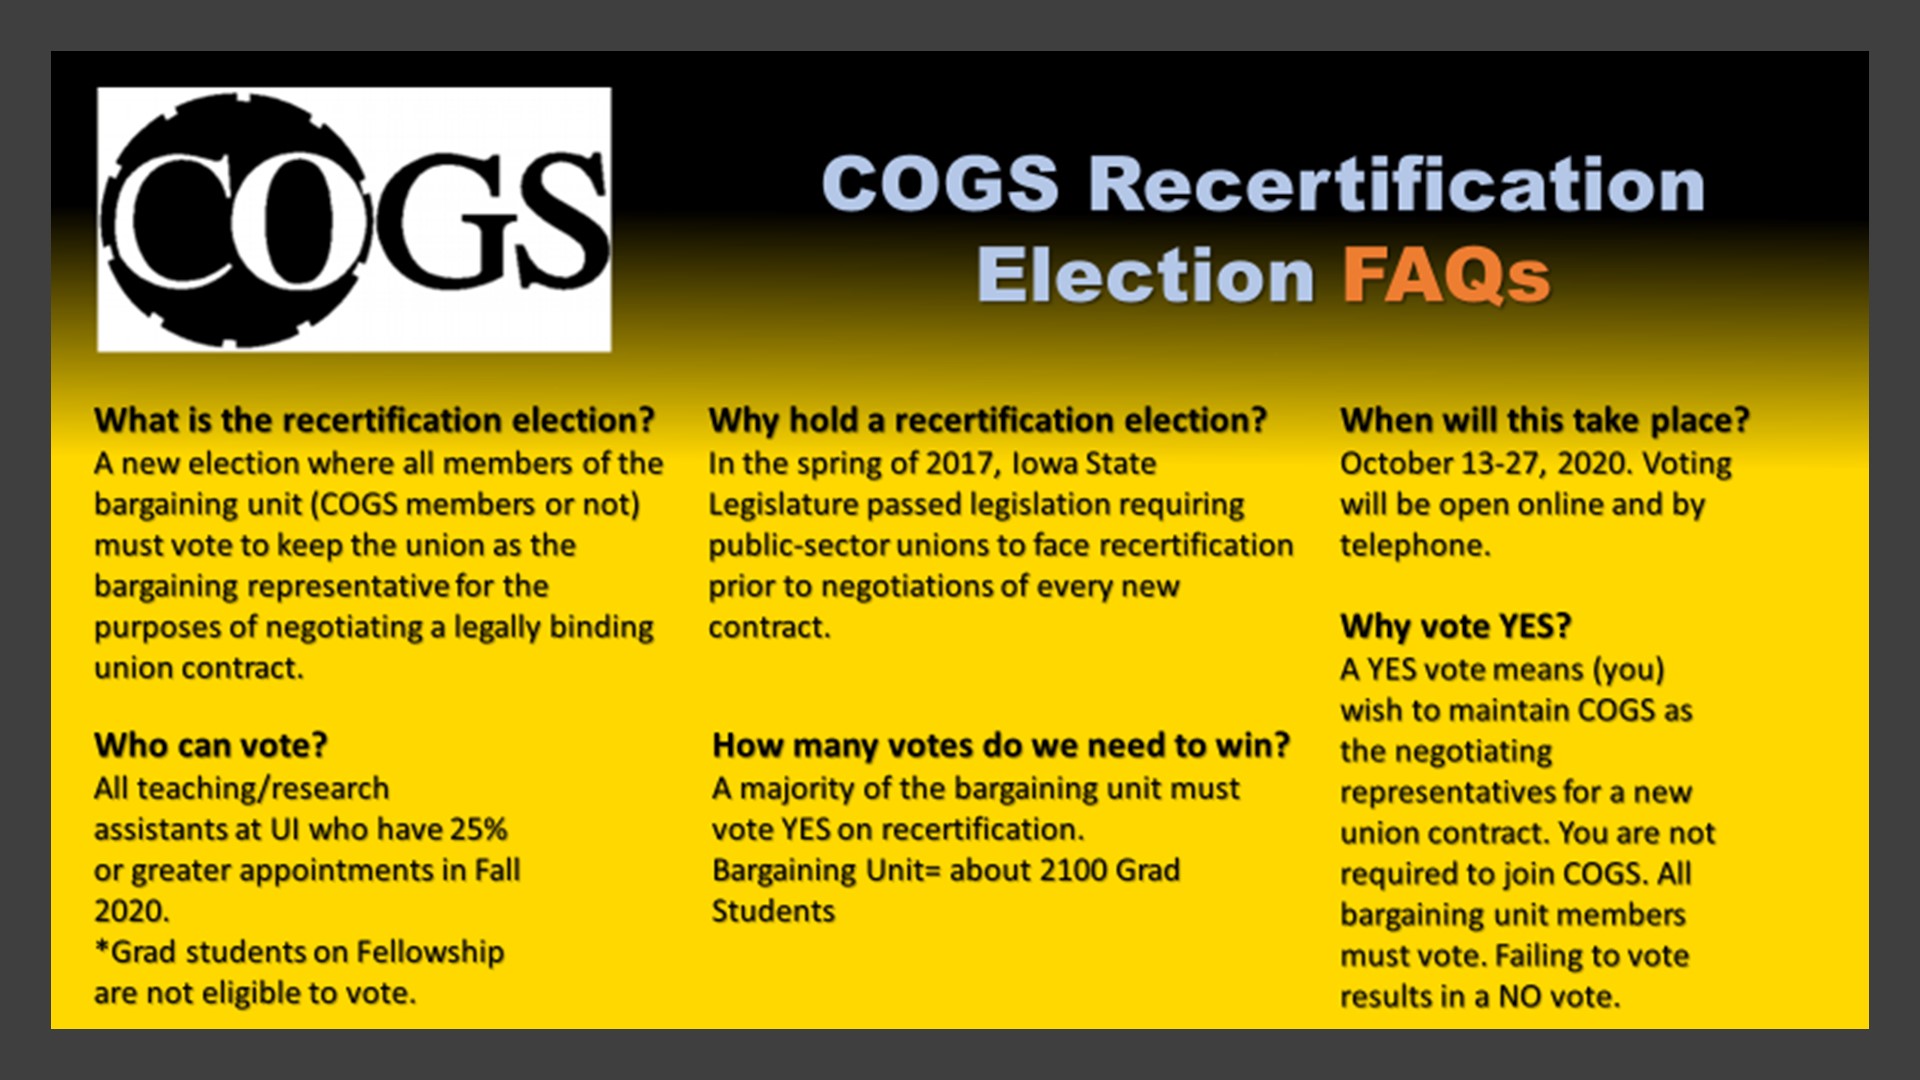 cogs_recertification_election_2020.jpg